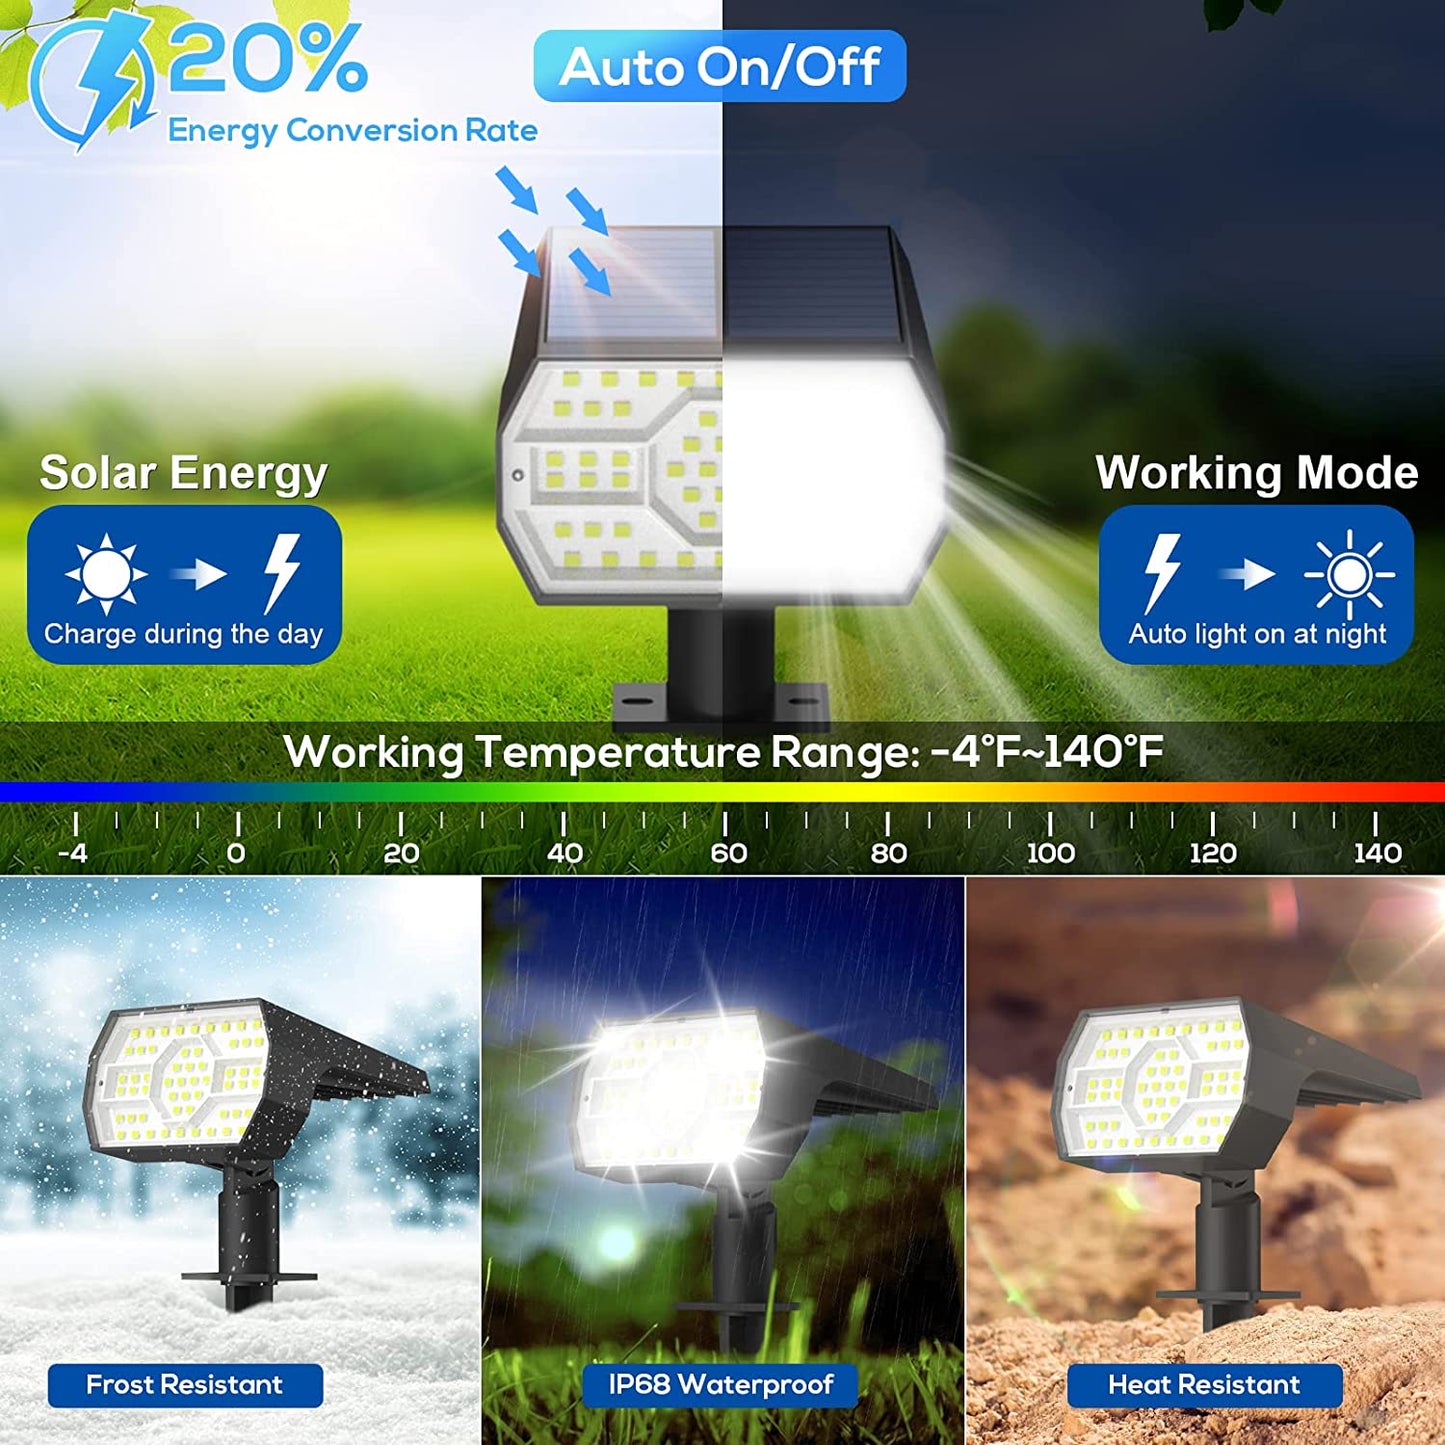 Premium Solar Lights Outdoor - IP68 Waterproof, 56 LED, 3 Lighting Modes | Solar Powered Garden Spotlights for Landscape - 4 Pack (Cool White)